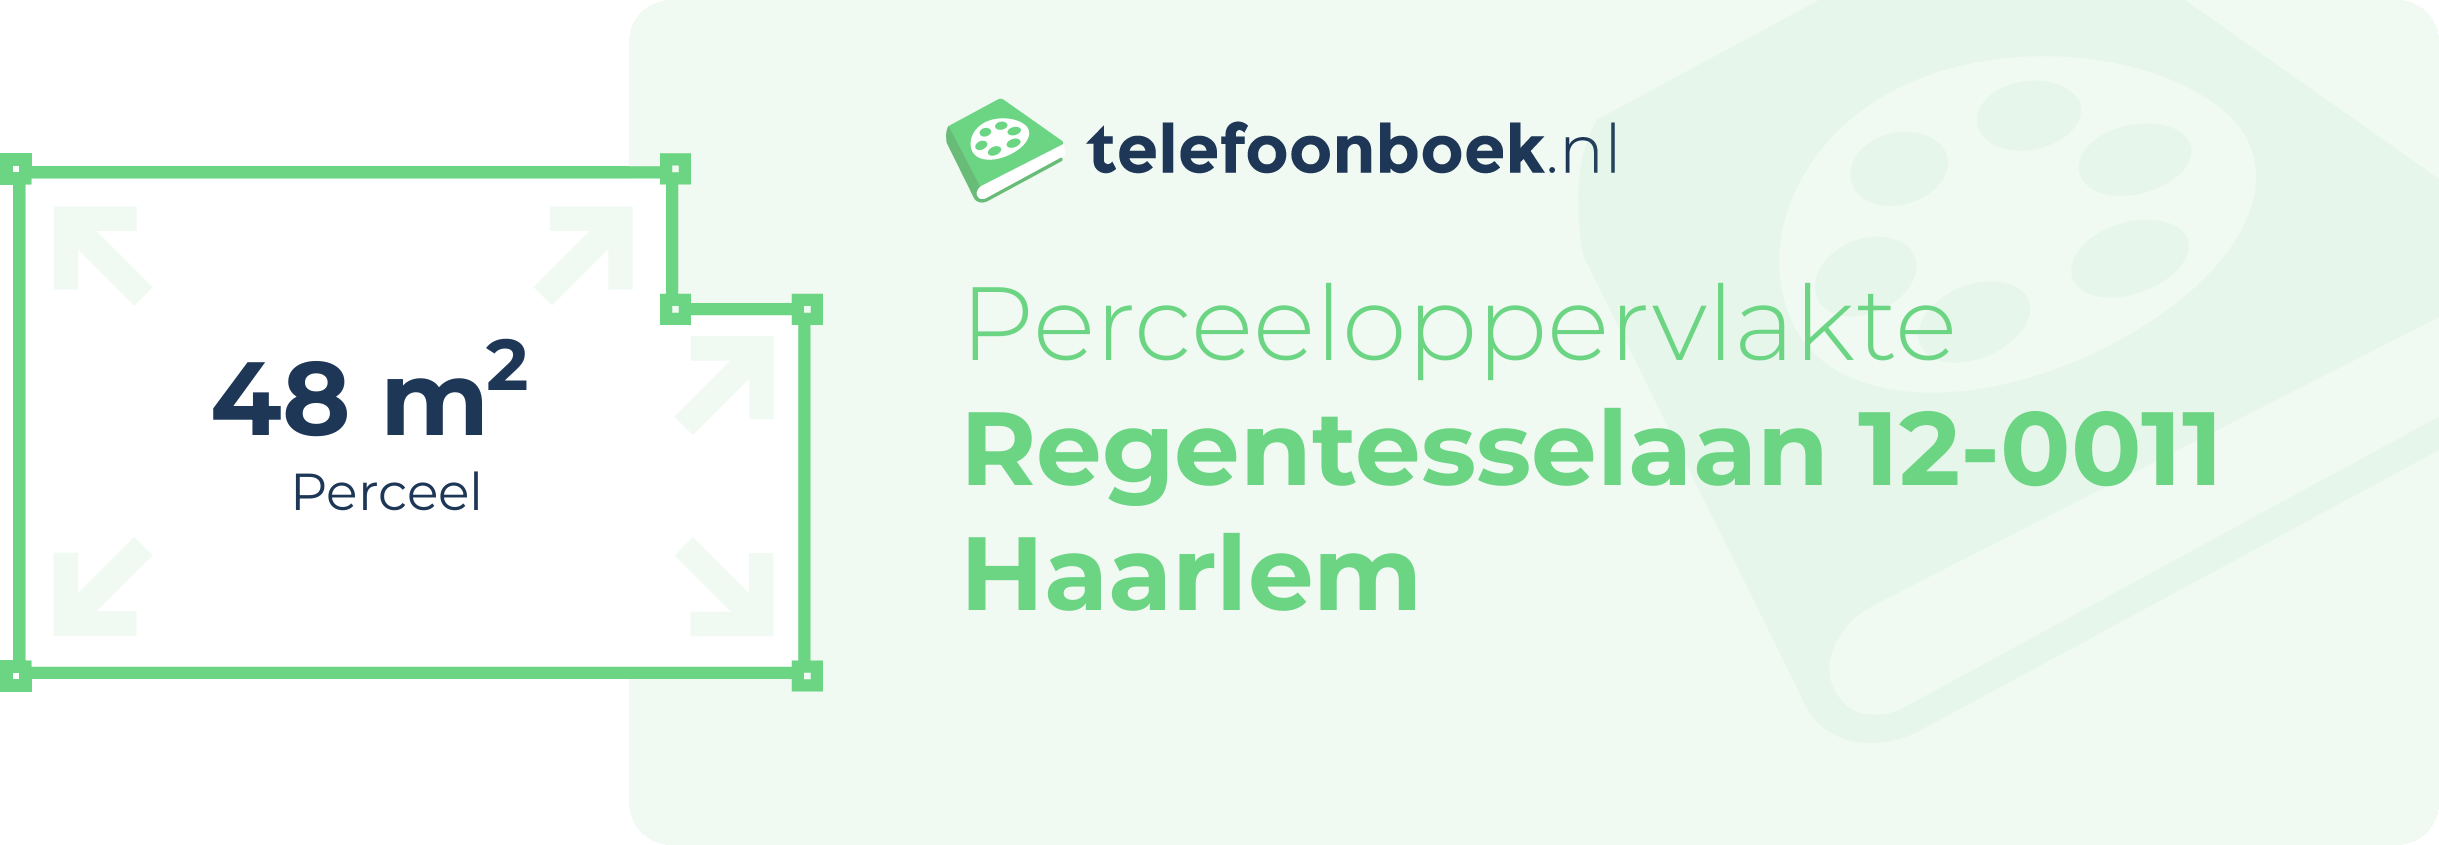 Perceeloppervlakte Regentesselaan 12-0011 Haarlem